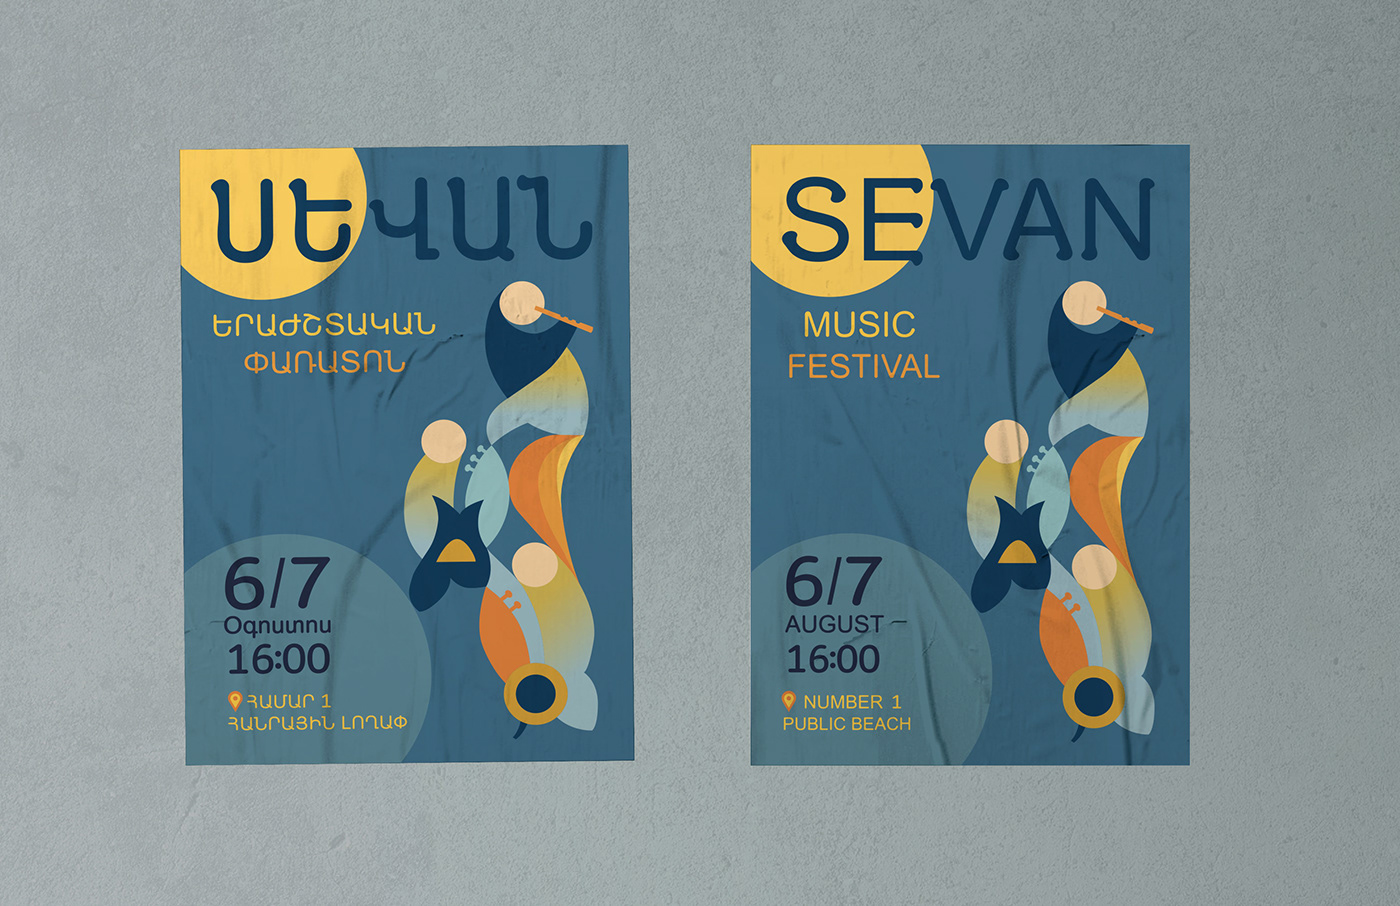 poster Armenia lake festival jazz music folk brochure ticket sevan